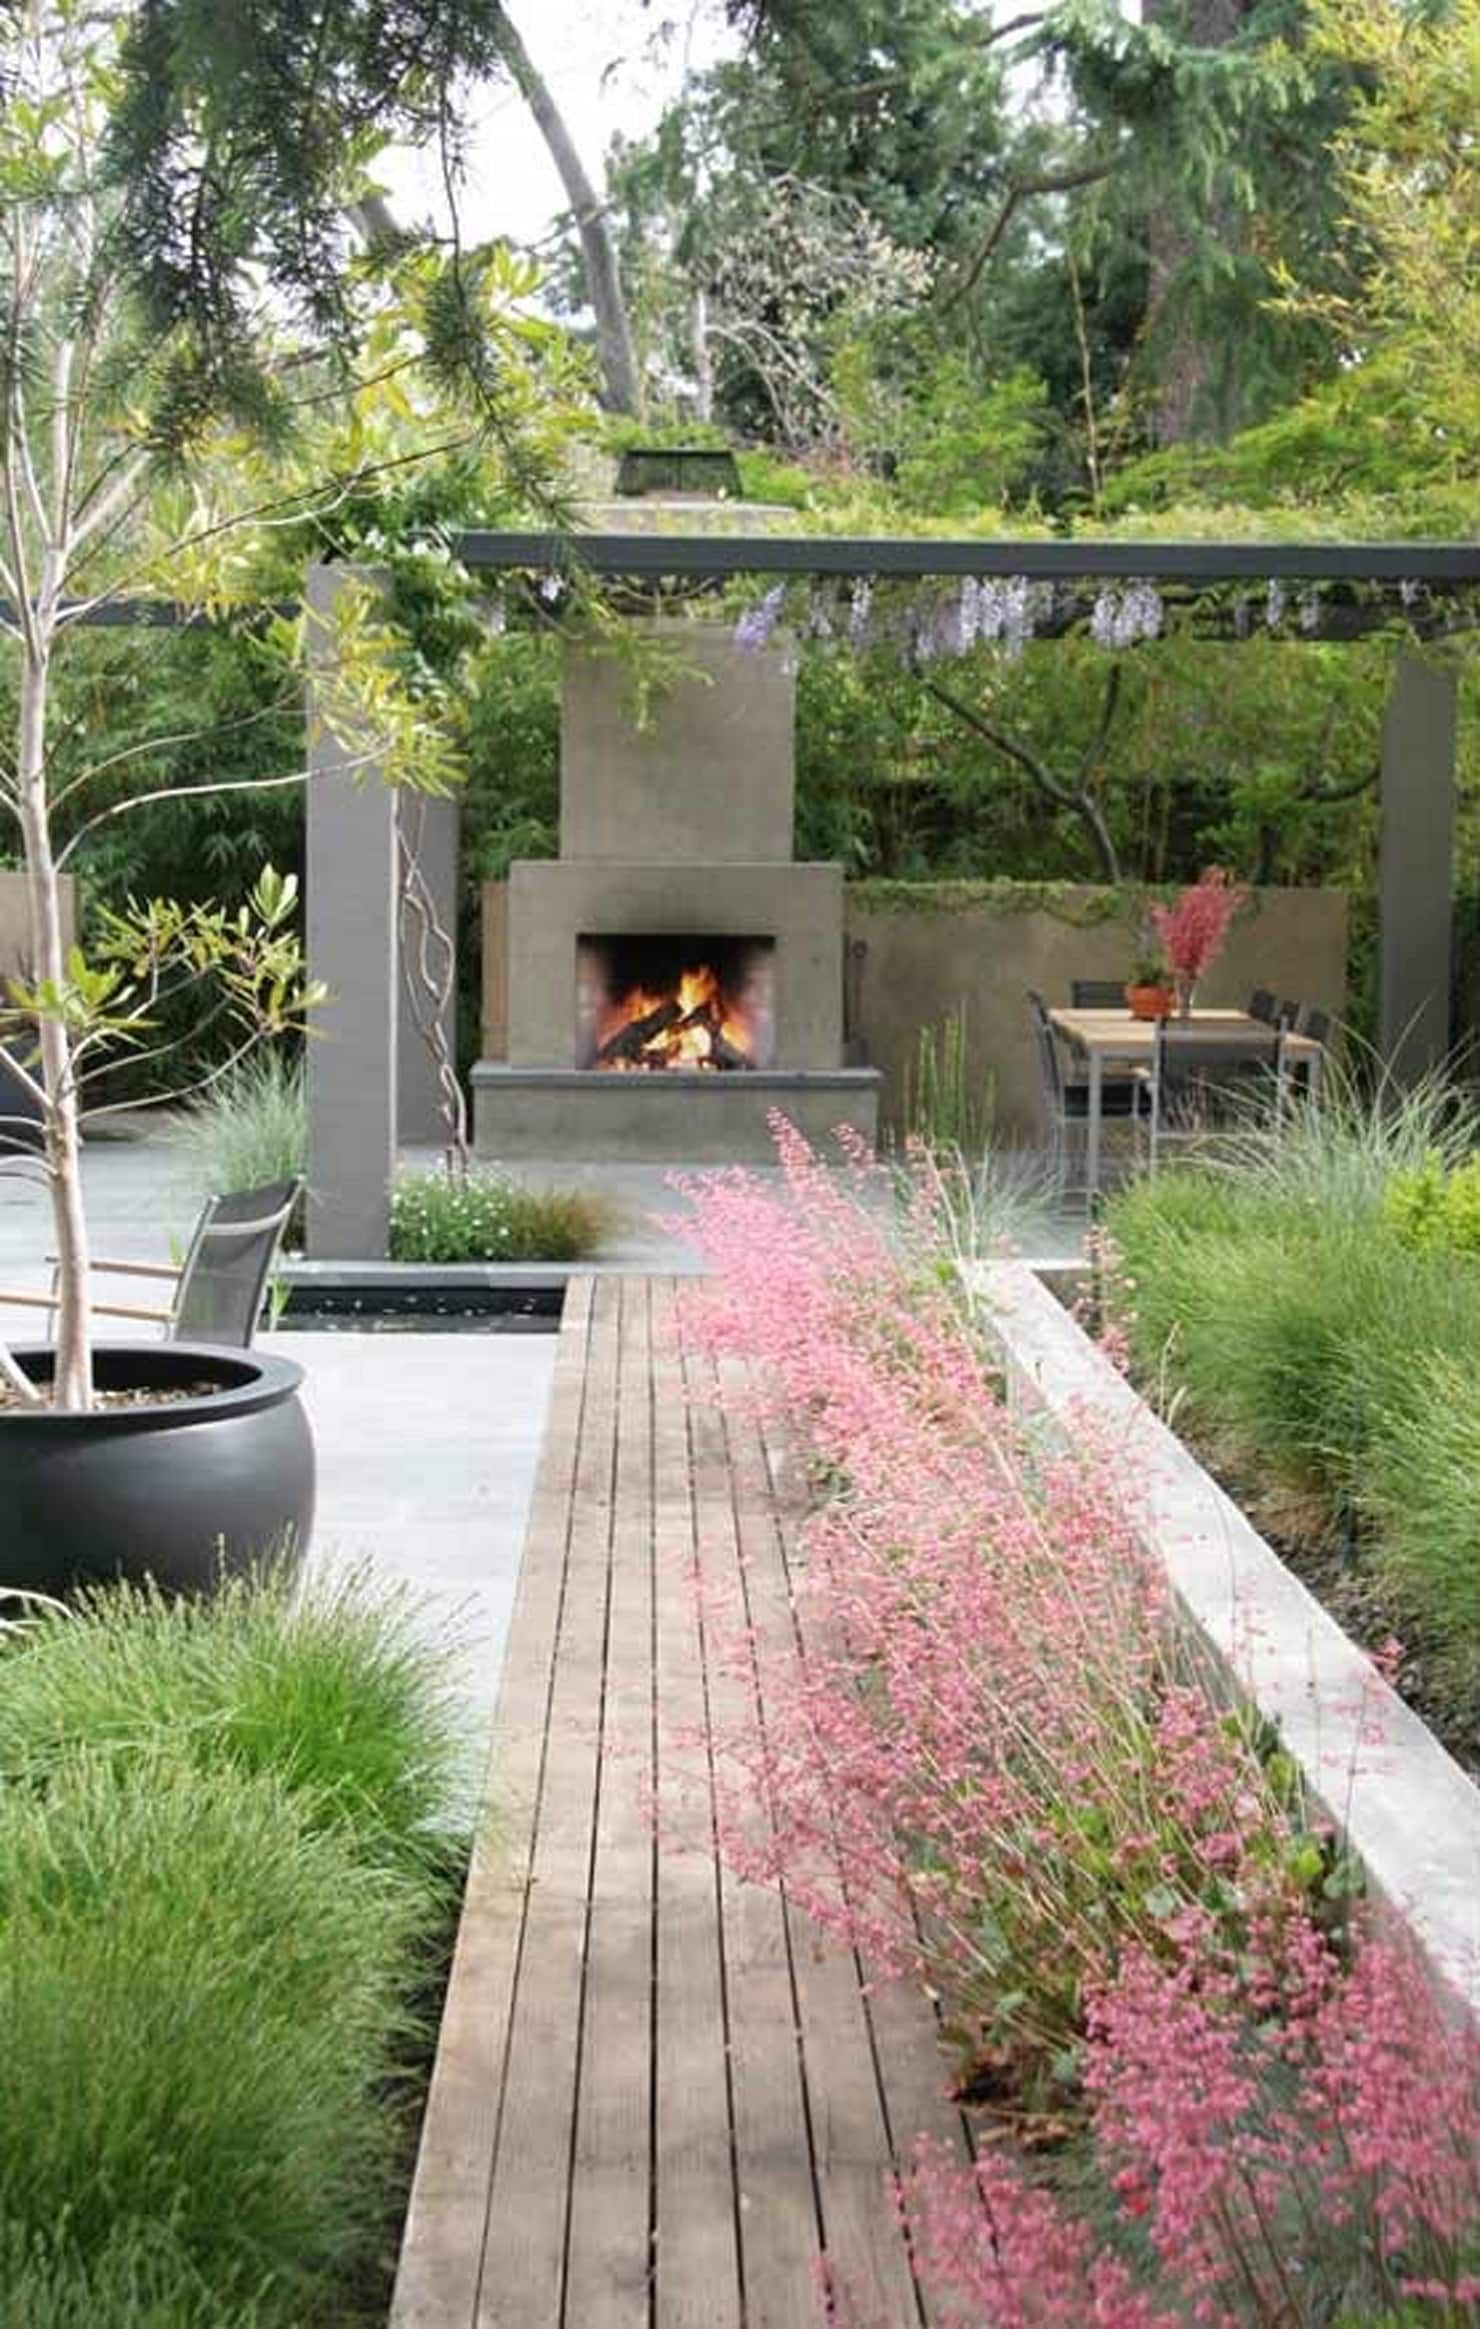 Elevating Outdoor Spaces: The Modern
Garden Design Revolution